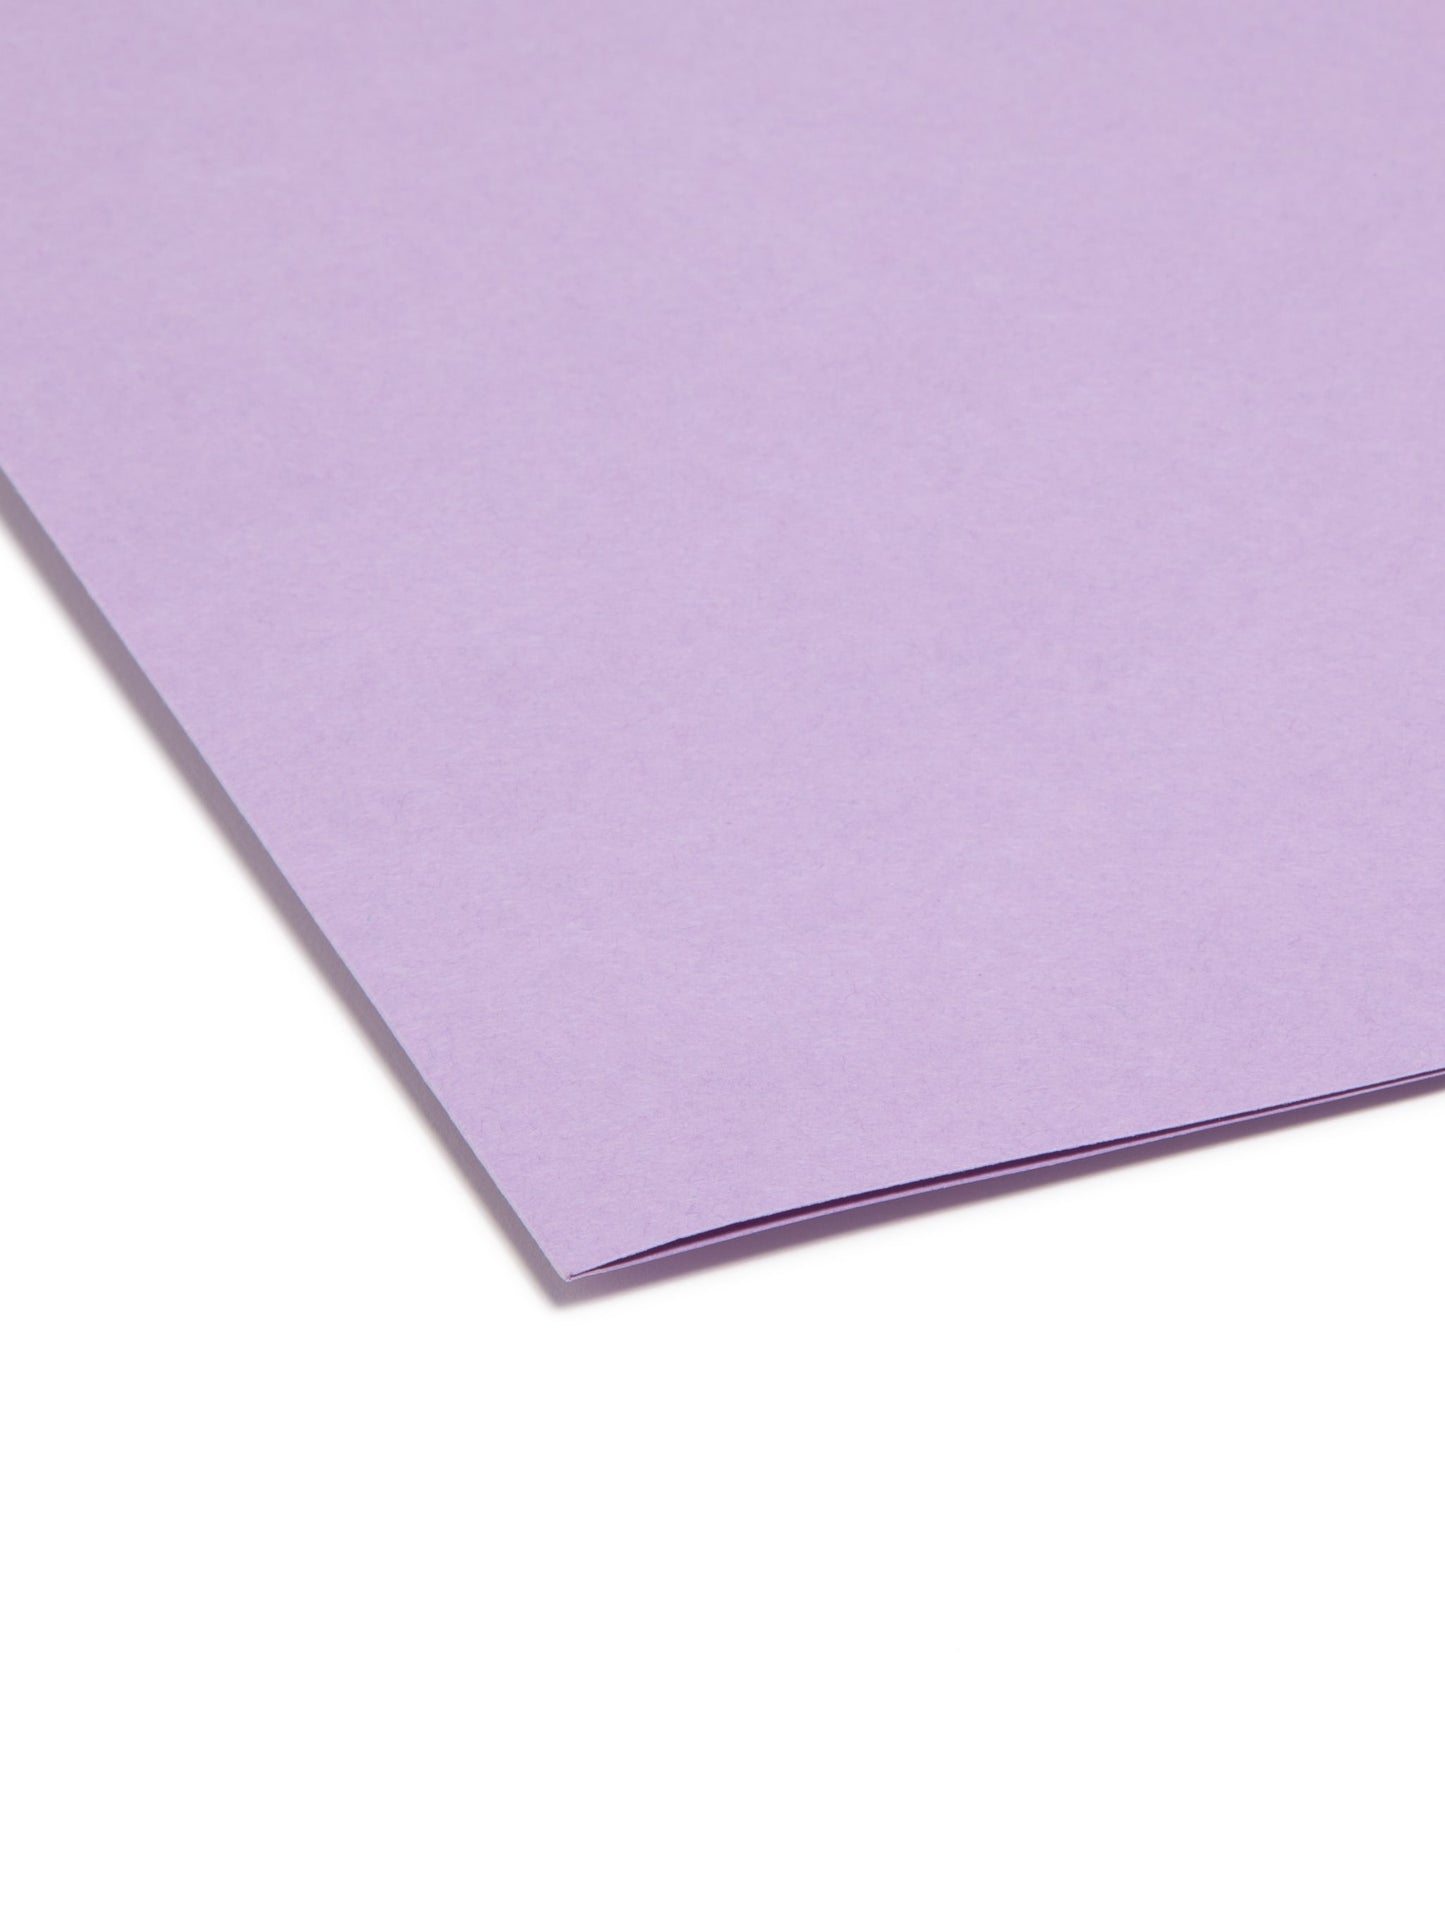 Reinforced Tab File Folders, 1/3-Cut Tab, Lavender Color, Letter Size, Set of 100, 086486124348